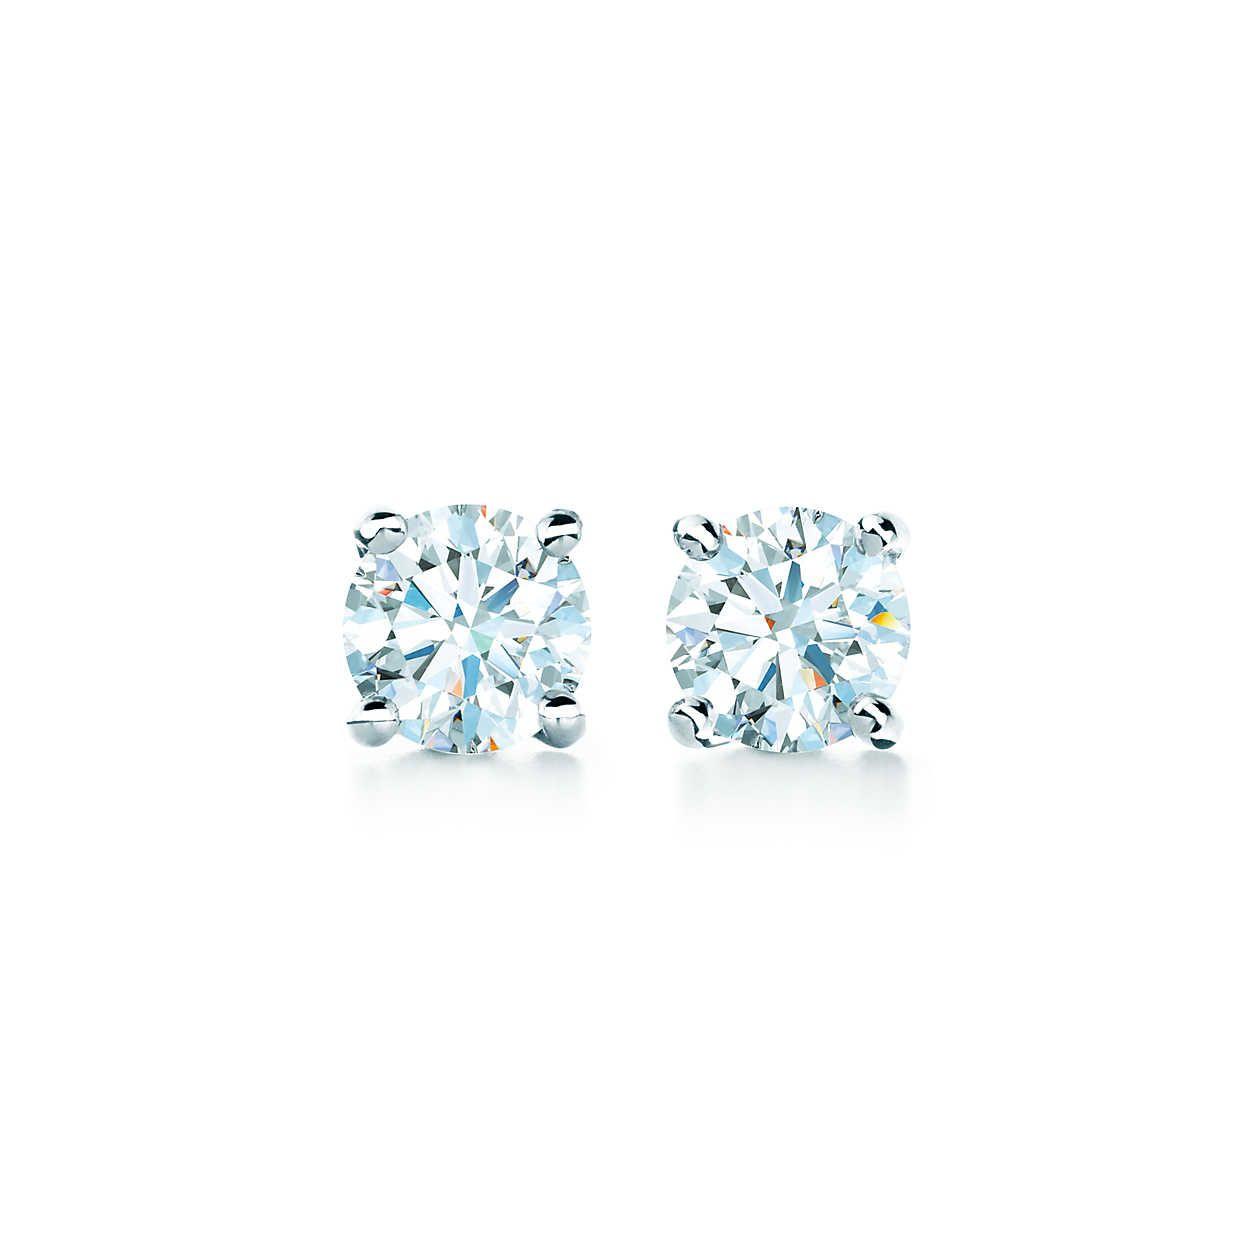 Tiffany Diamonds Logo - Diamond Earrings in Platinum. Tiffany & Co